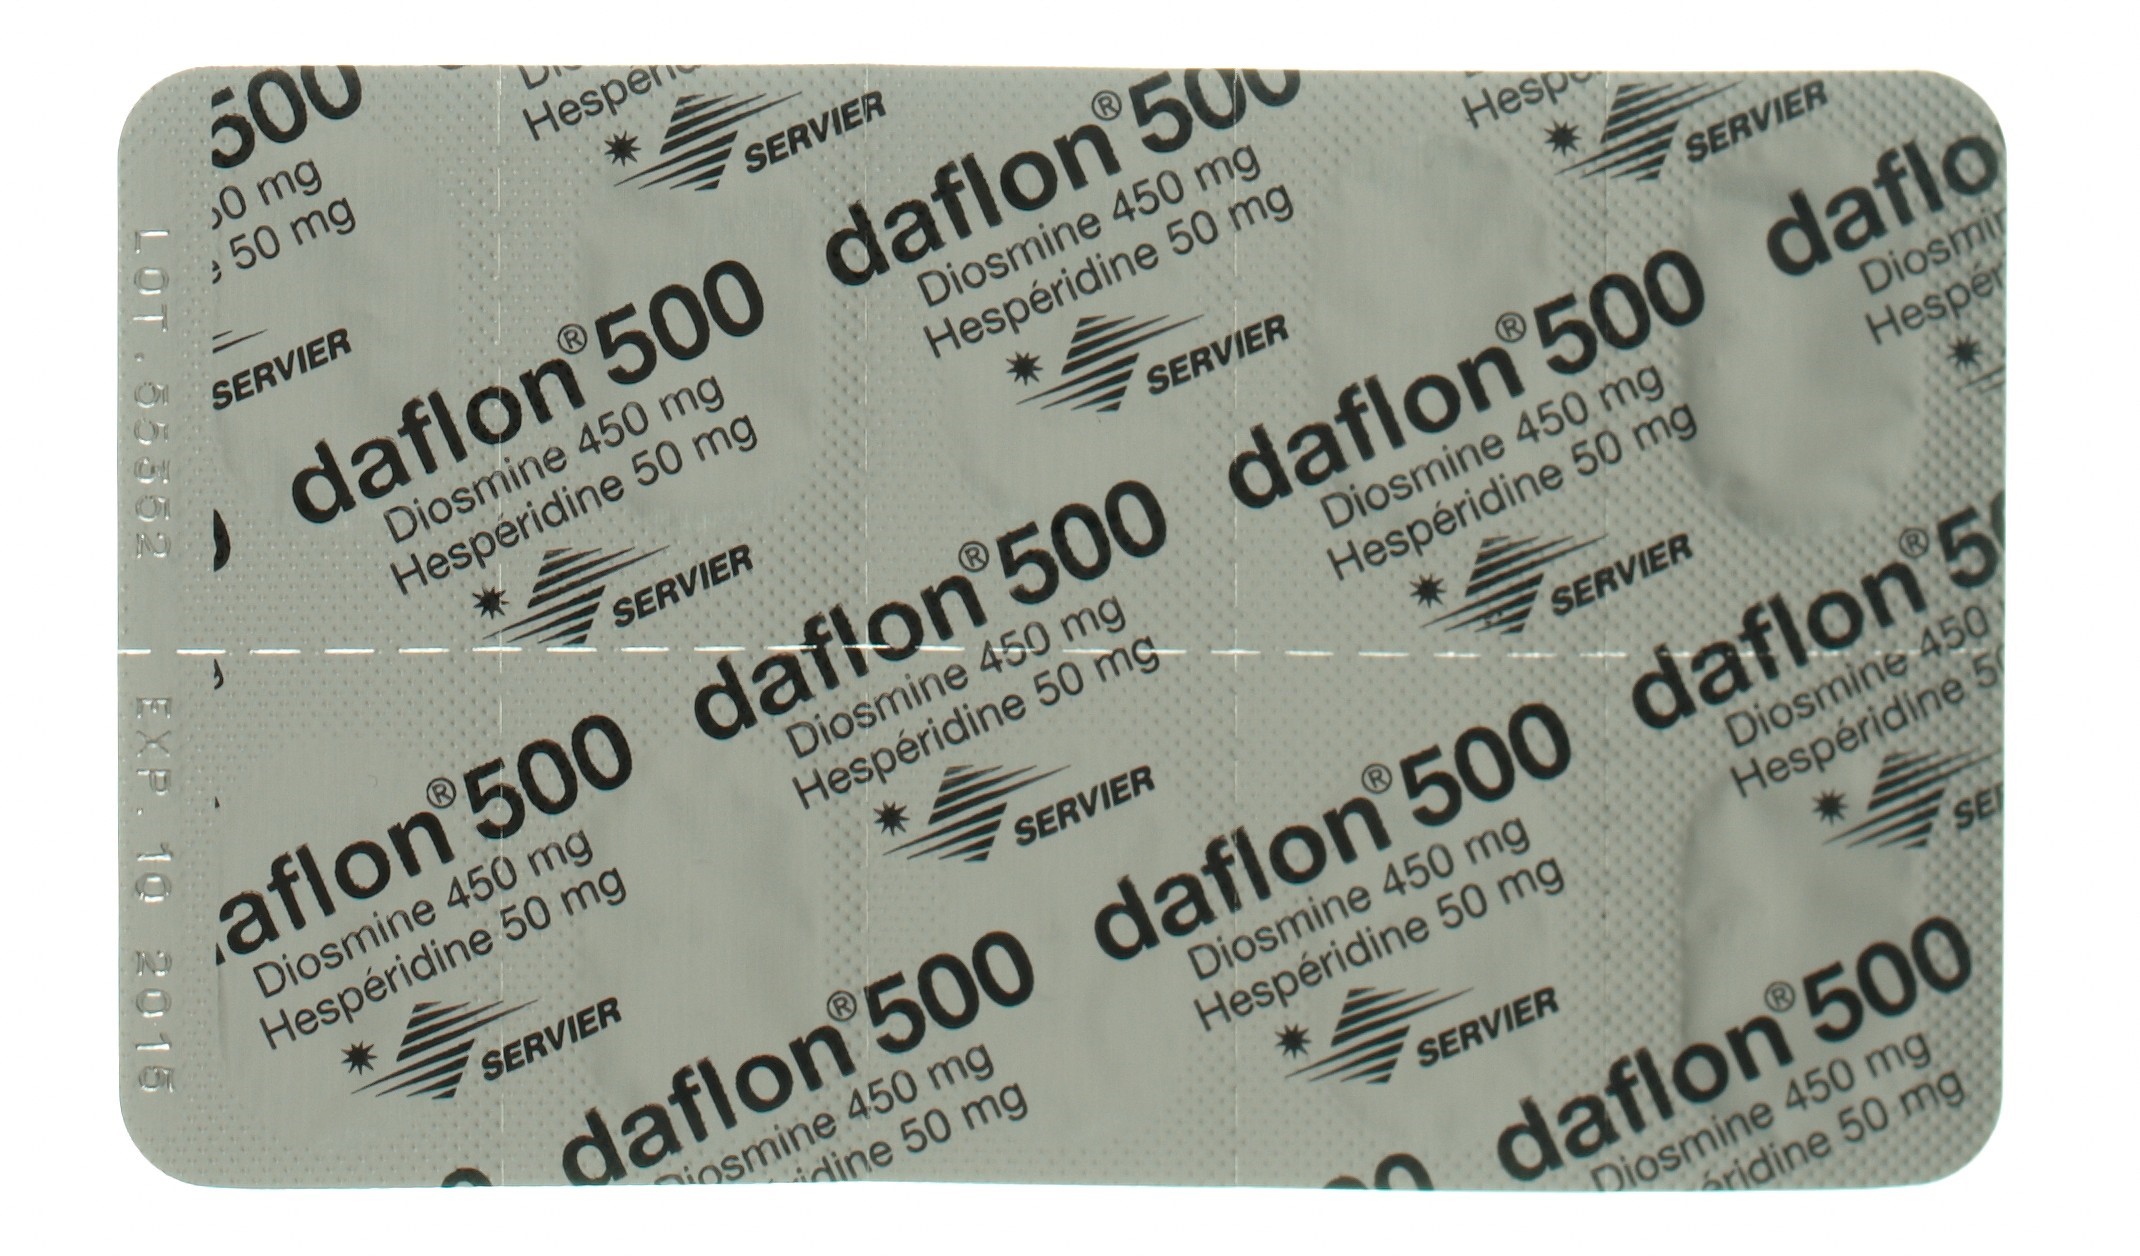 Daflon Filmtabl 500 mg